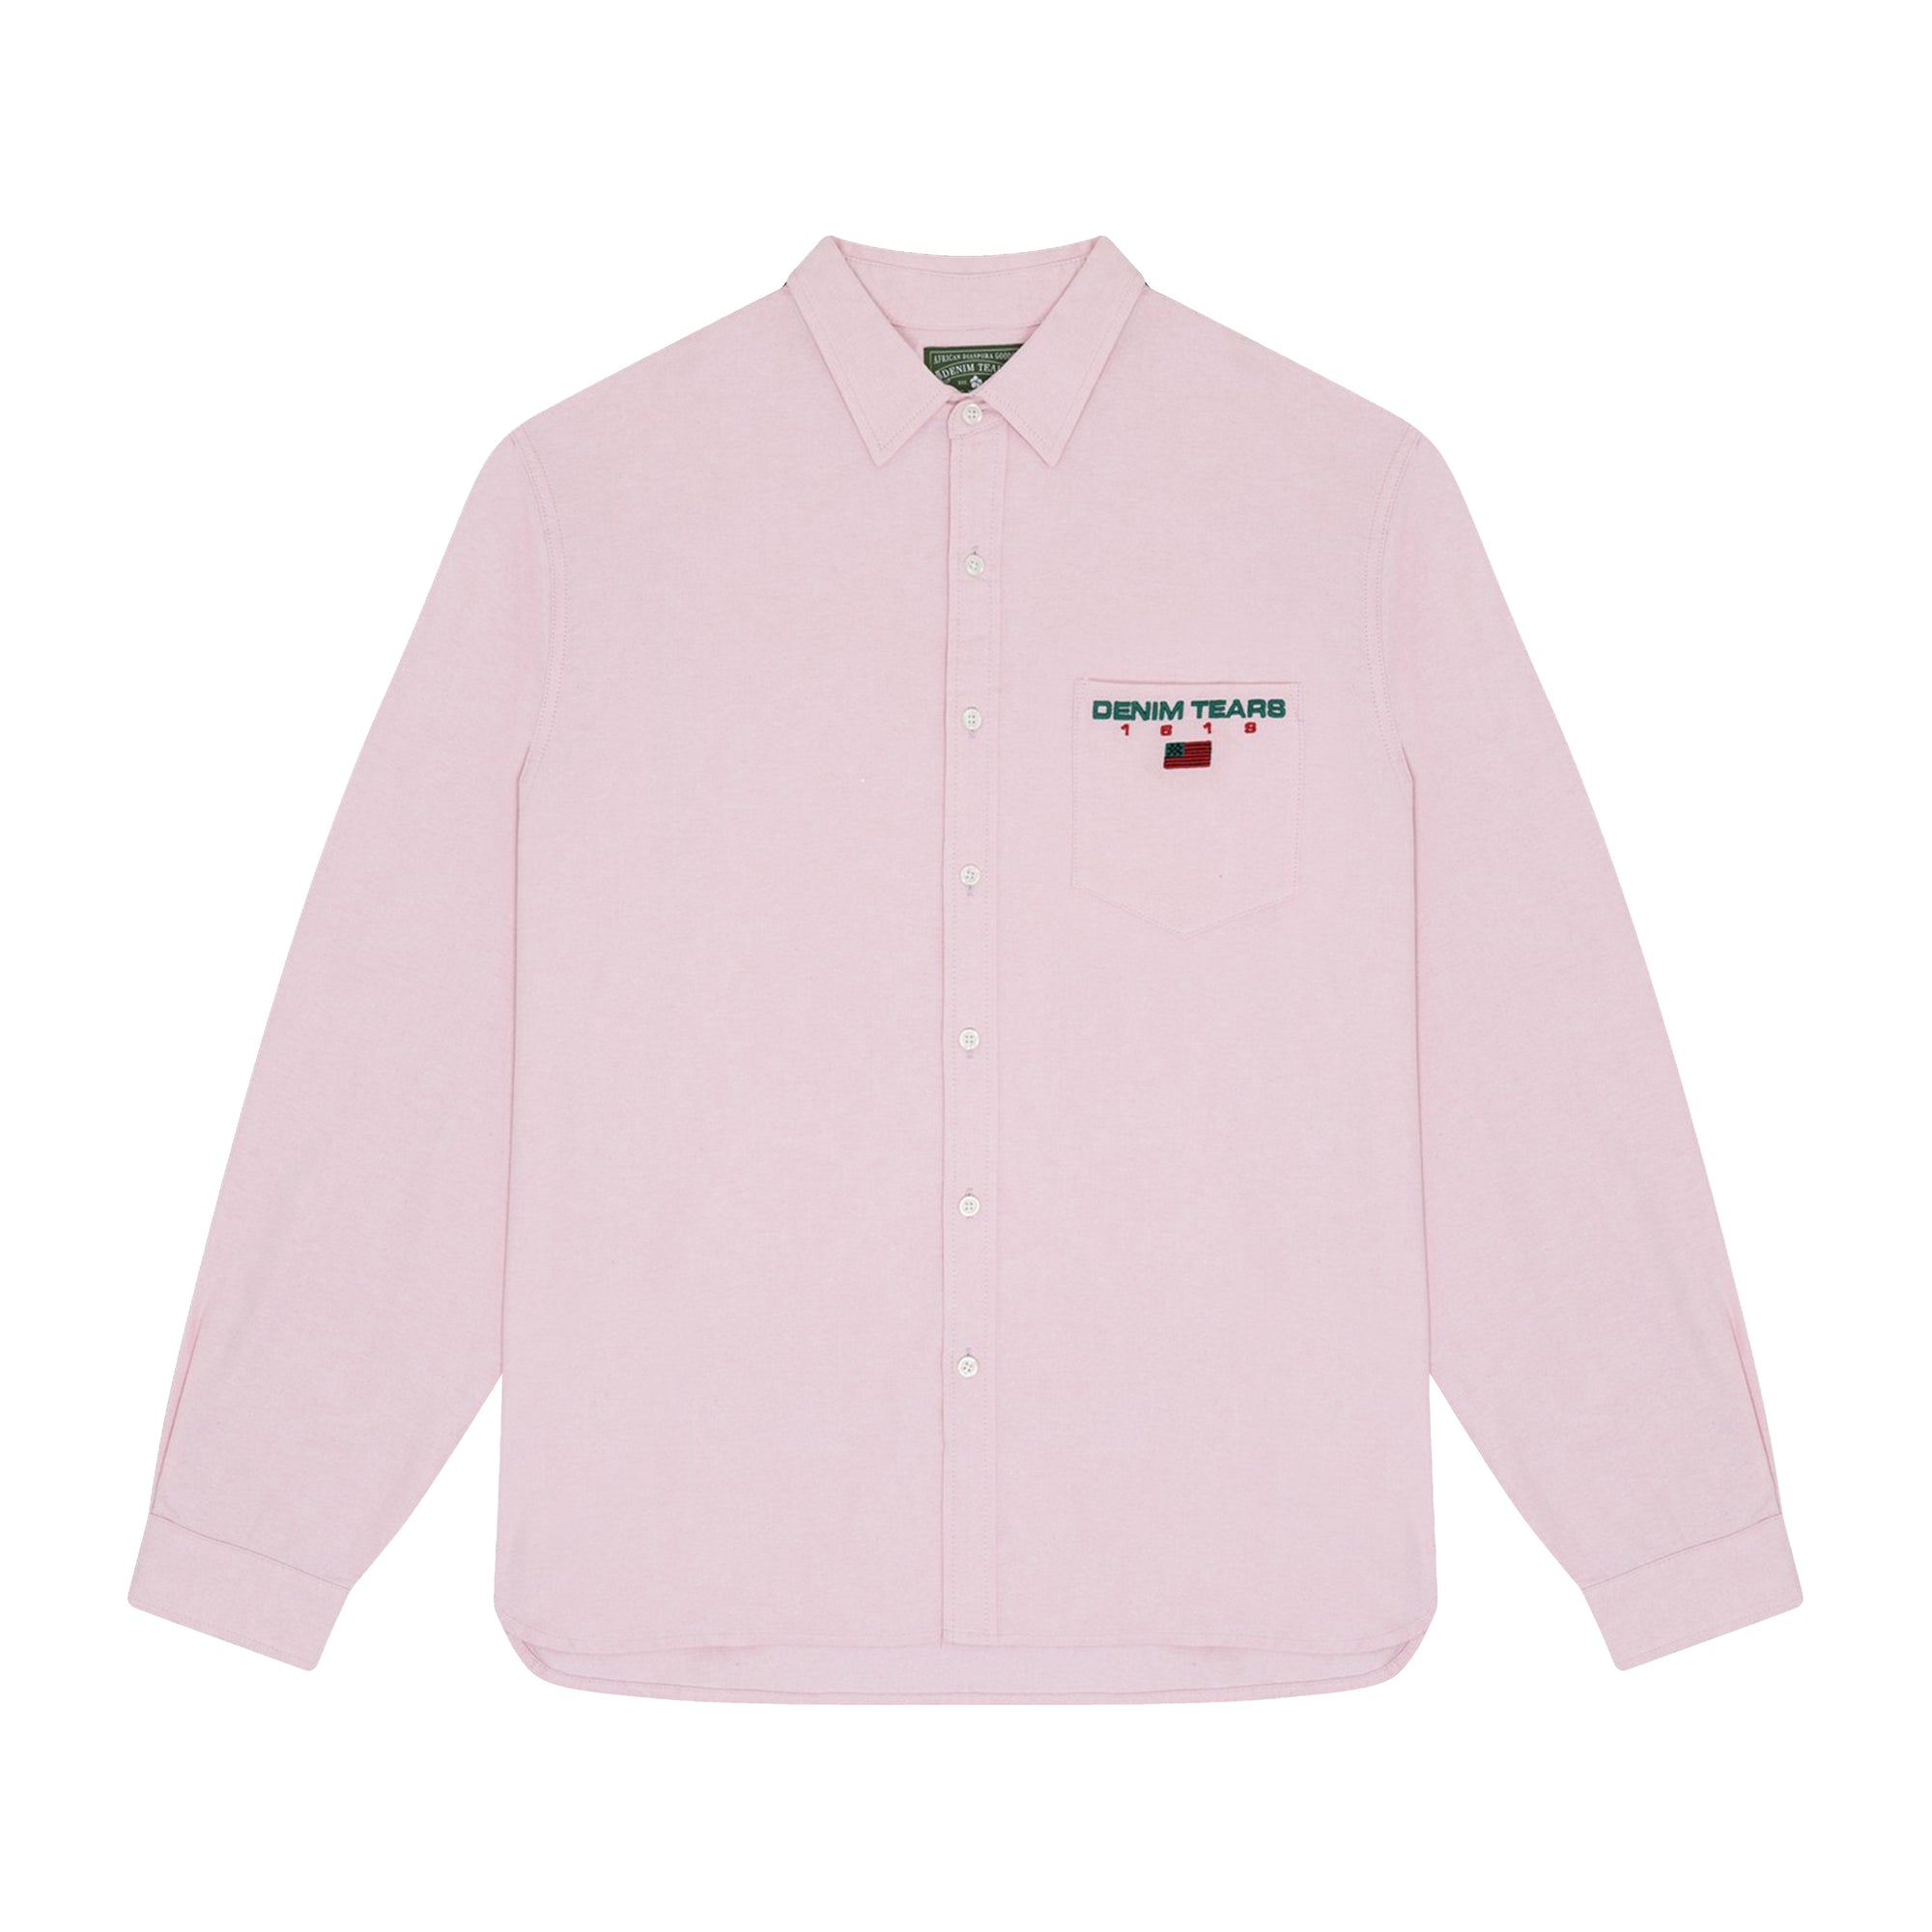 Denim Tears - Men's Denim Sport Oxford Shirt - (Pink) view 1